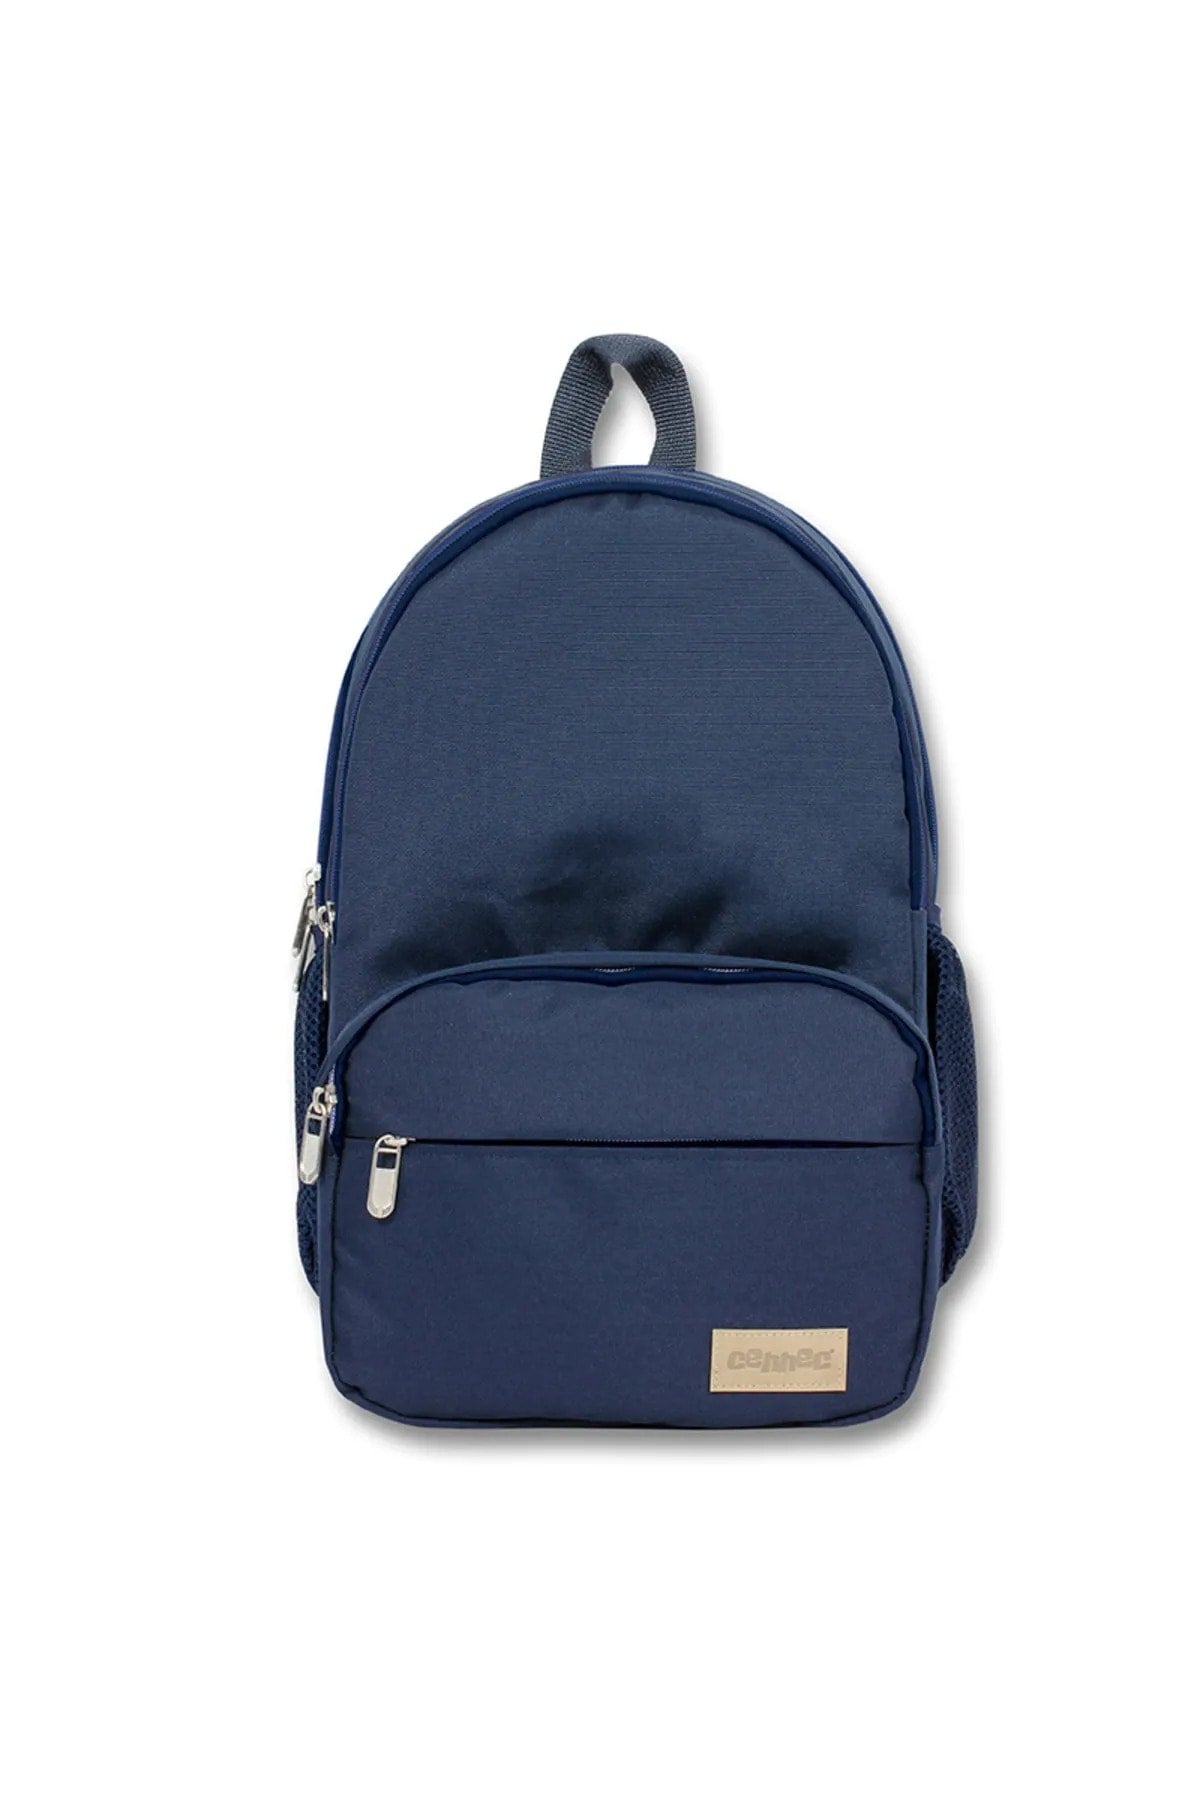 Cennec-navy blue Kids Primary School School Bag-2618